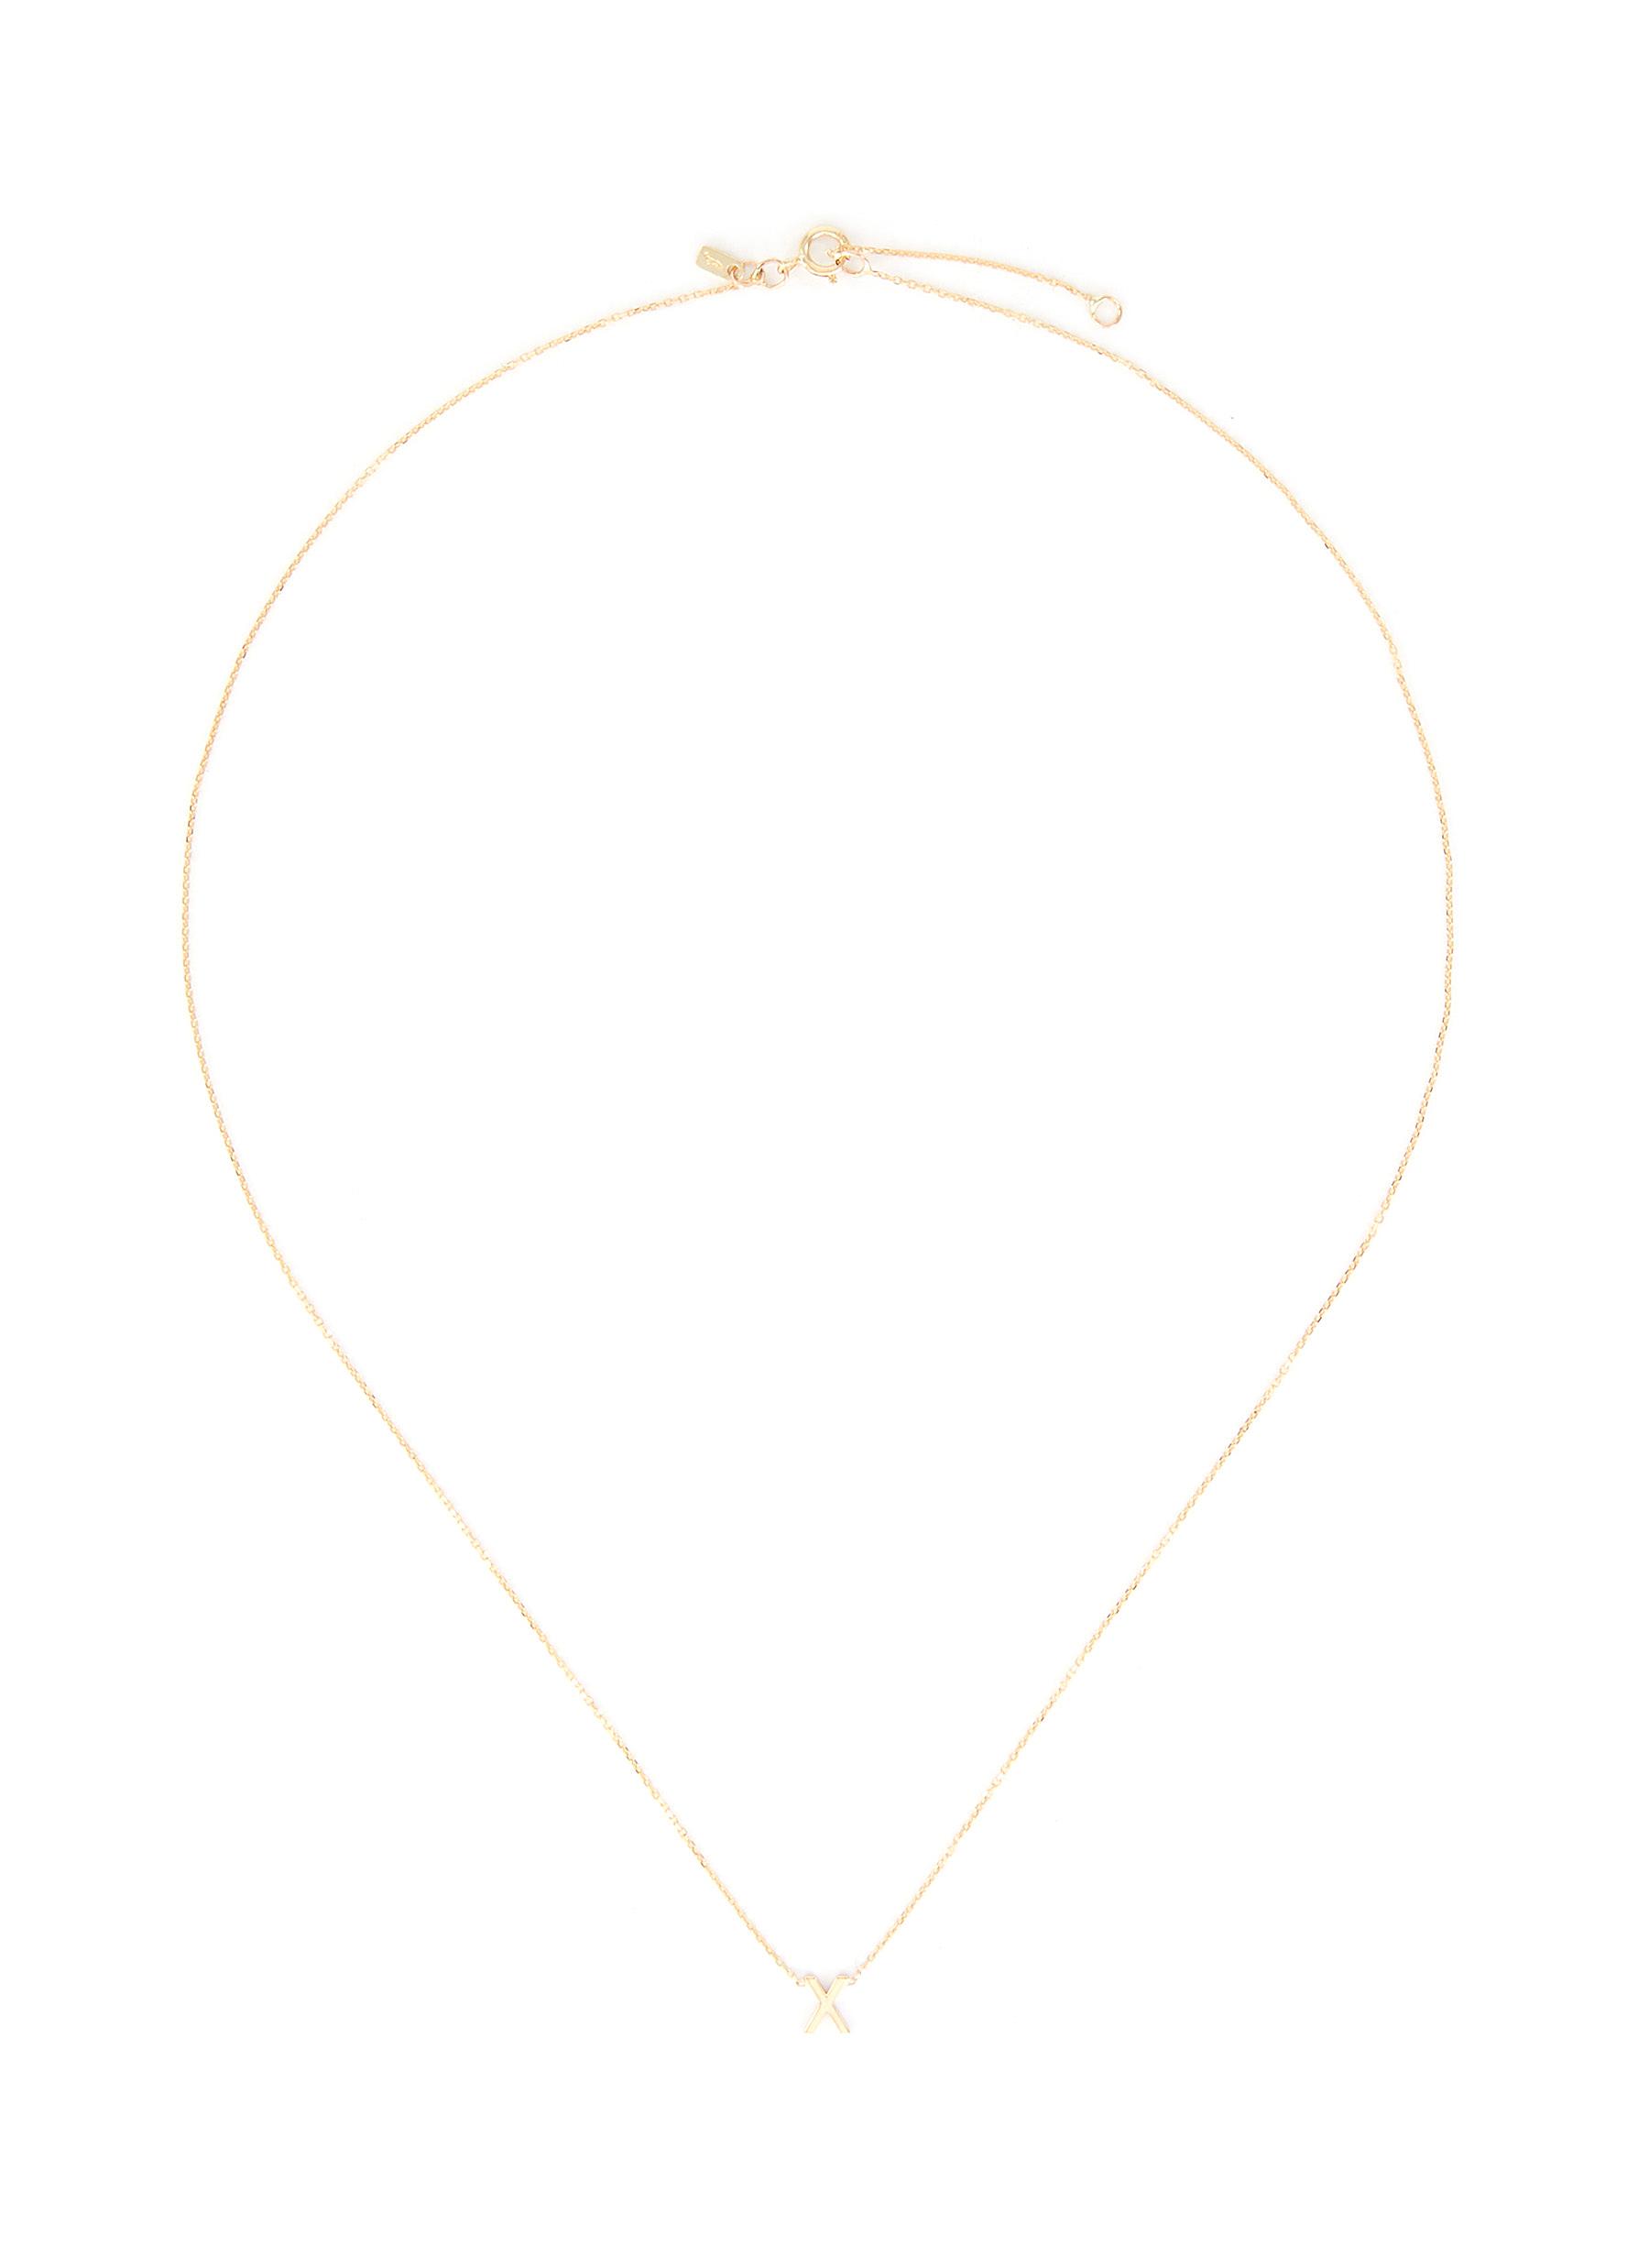 Sarah & Sebastian Petite Letter' Gold Necklace - X In Metallic